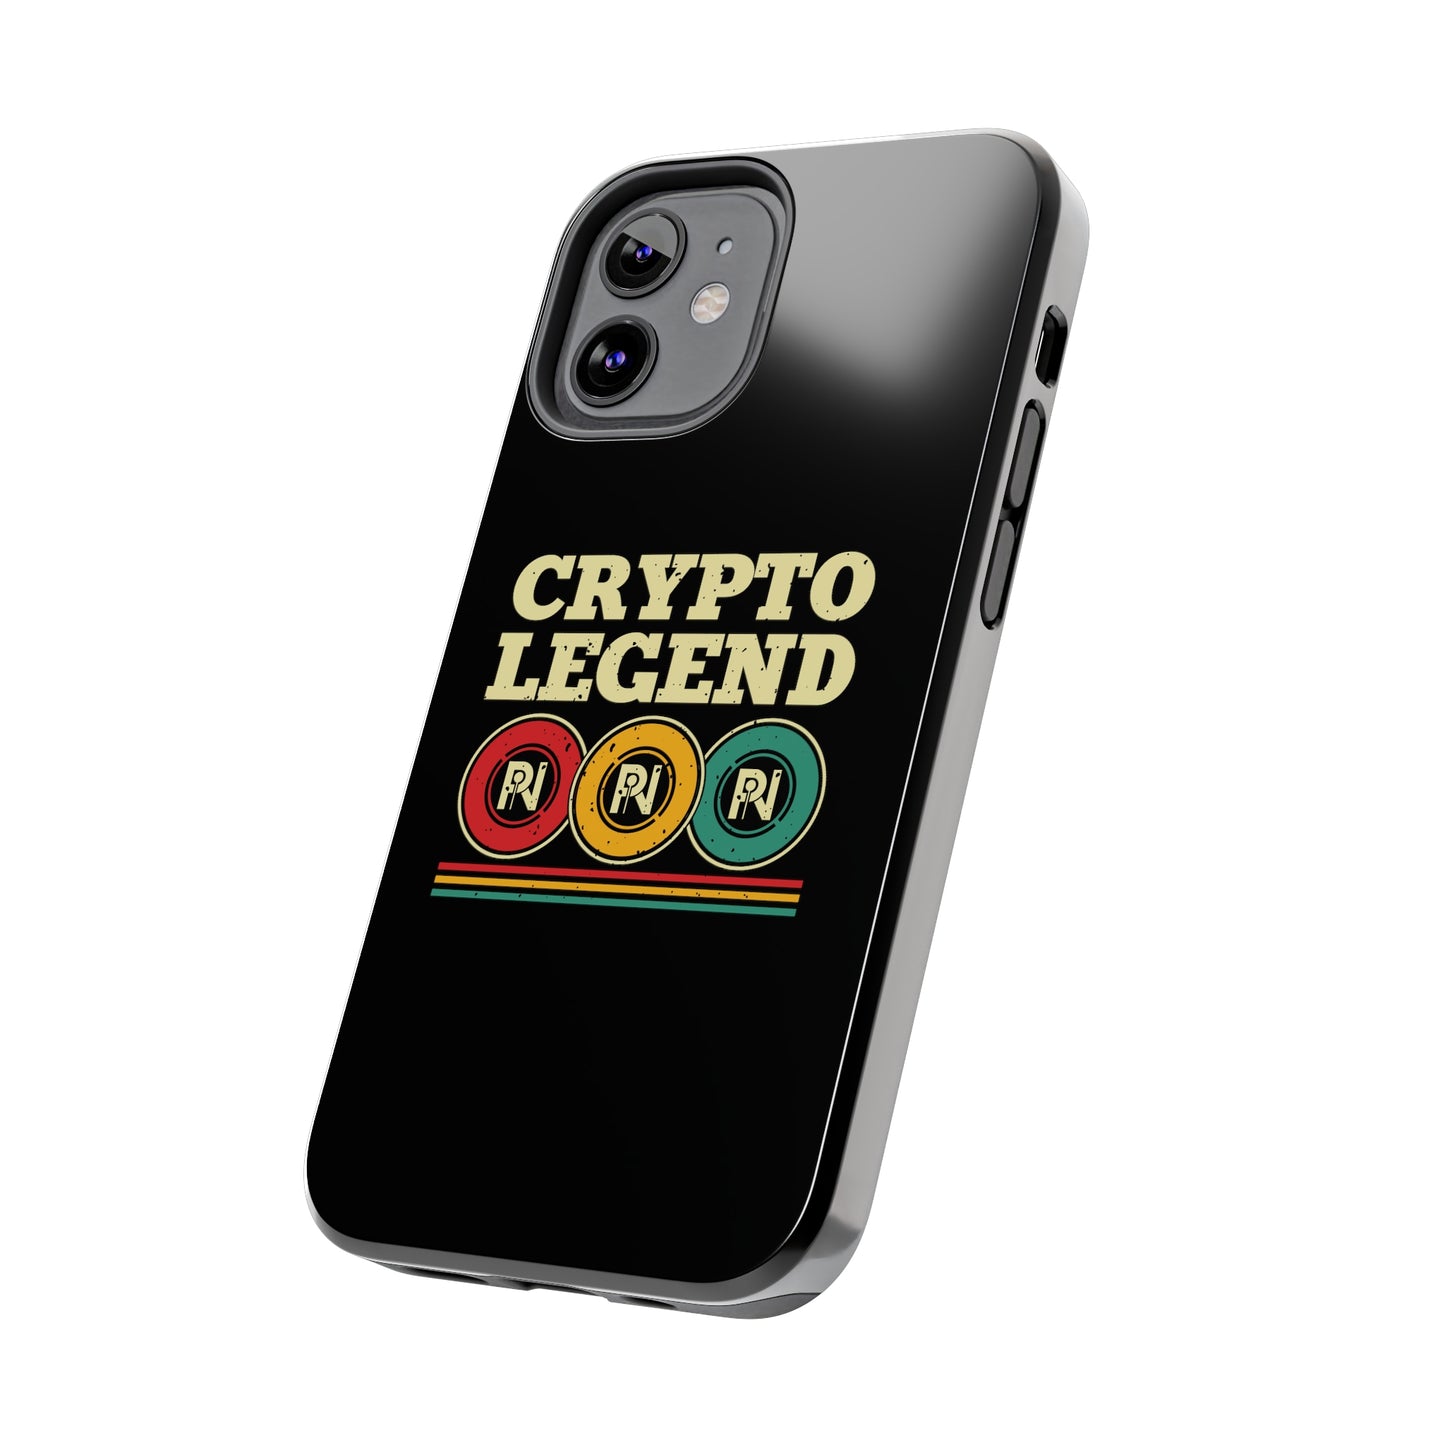 Tough iPhone Case (Crypto Legend Black)